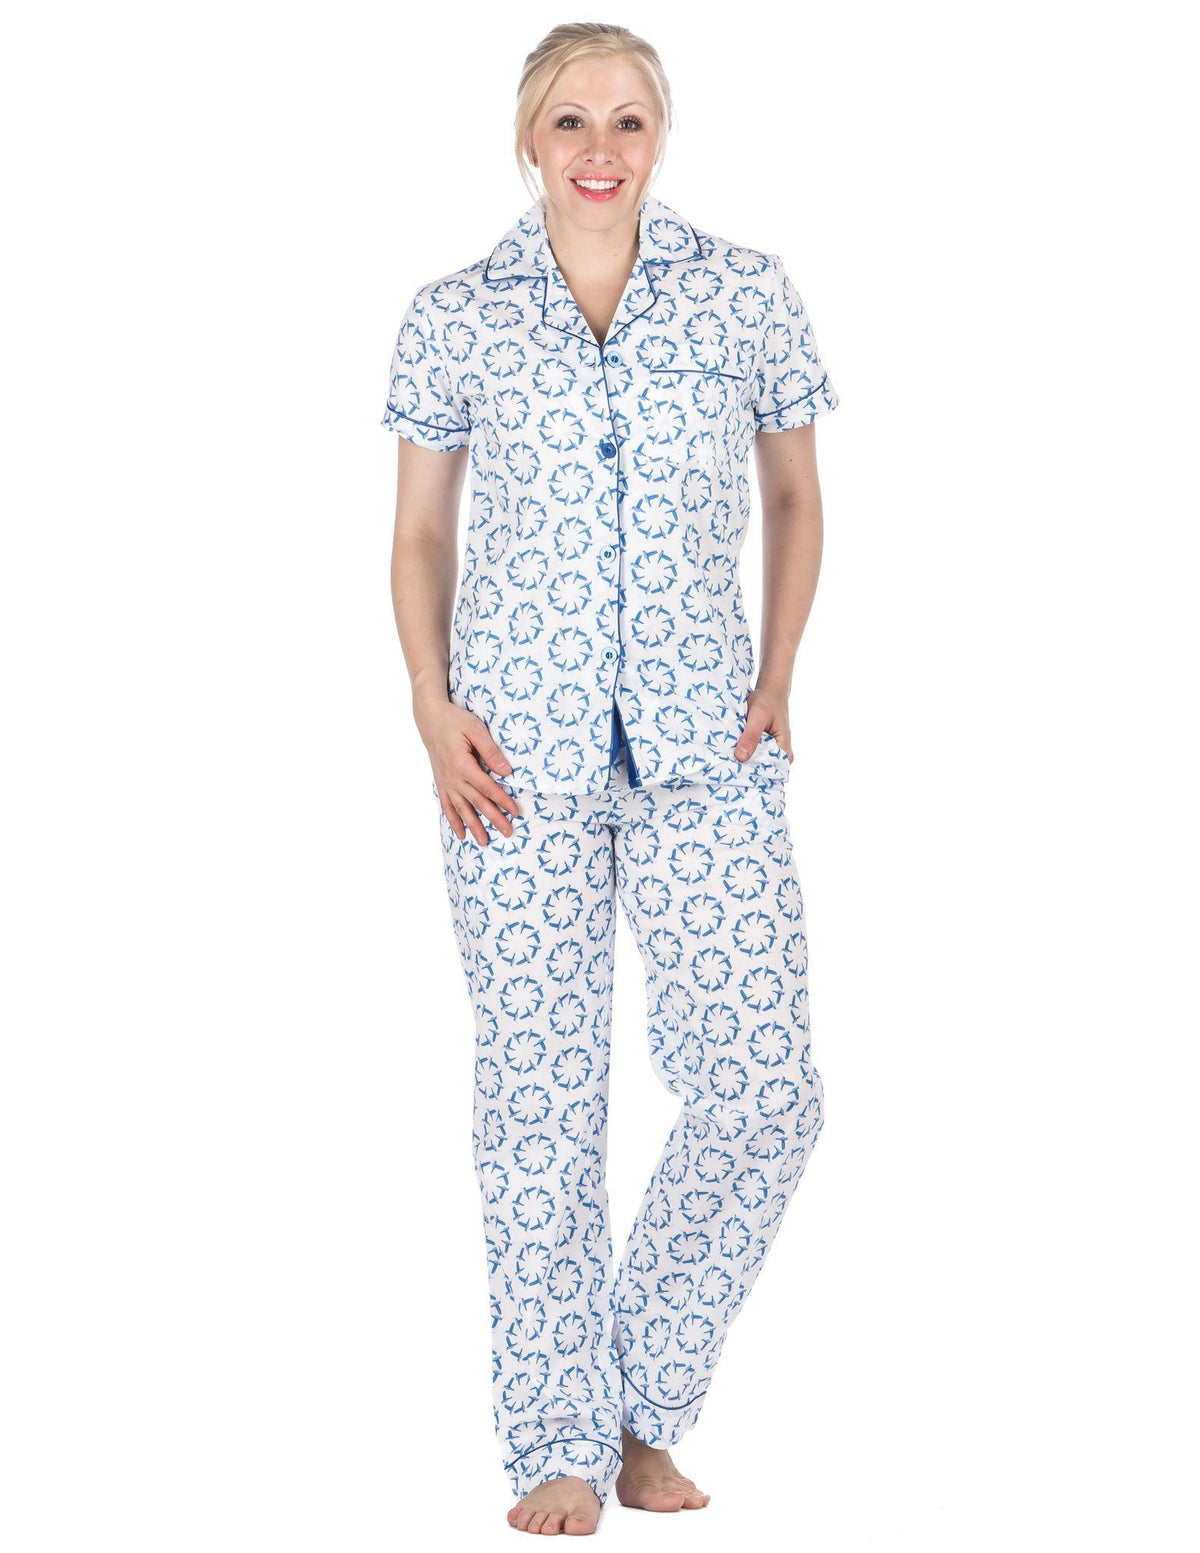 Women's Premium 100% Cotton Poplin Short Sleeve Pajama Set - Humming Wheels - White/Blue